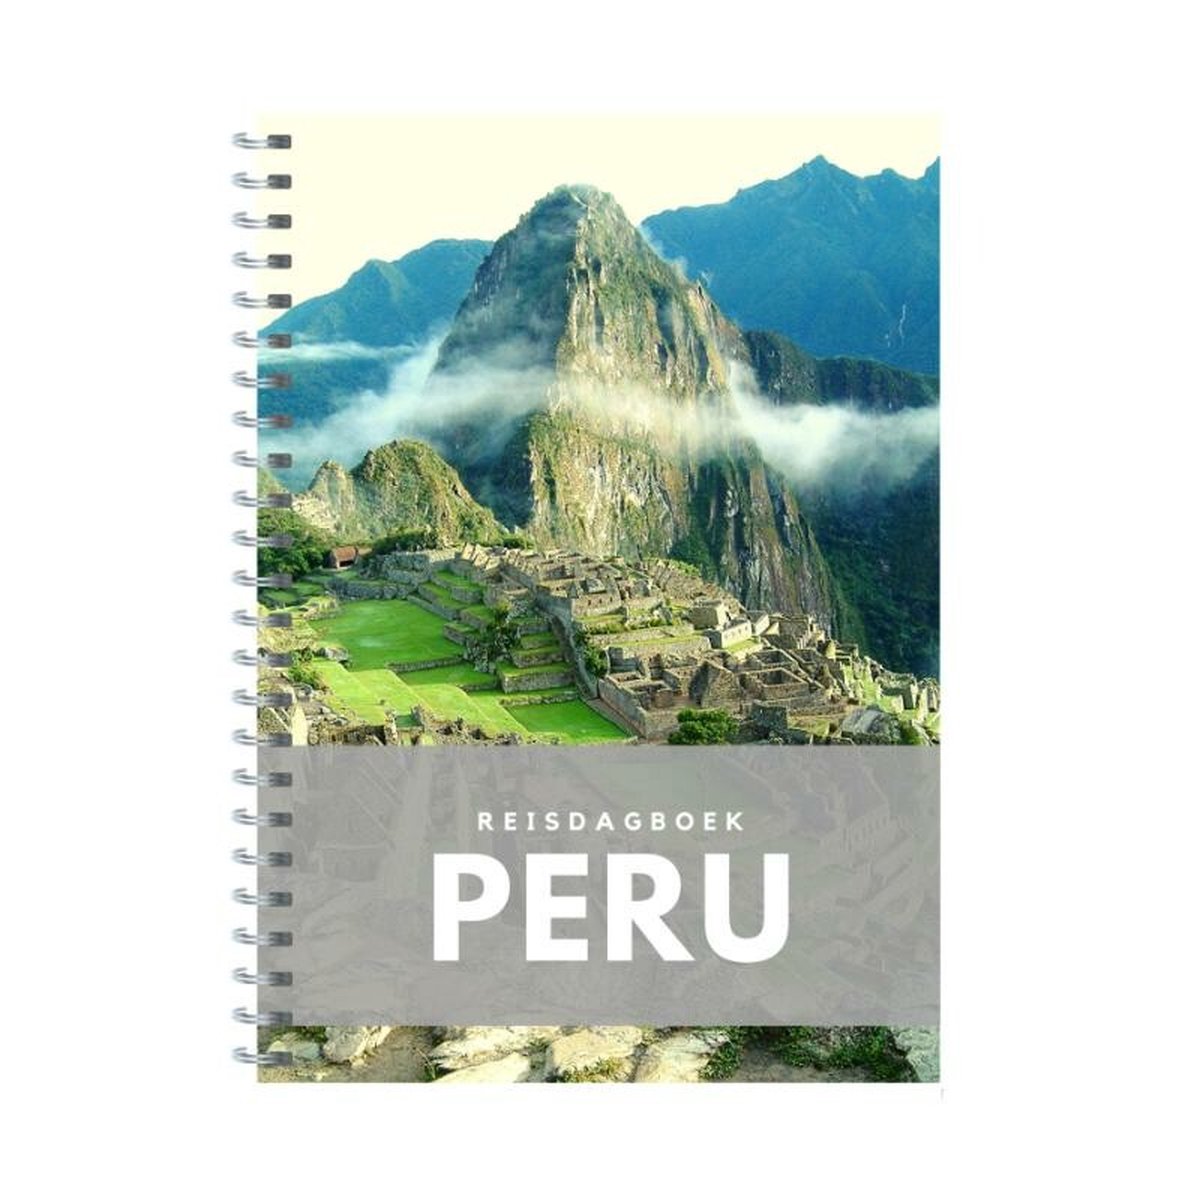 Reisdagboek Peru - schrijf je eigen reisboek Peru